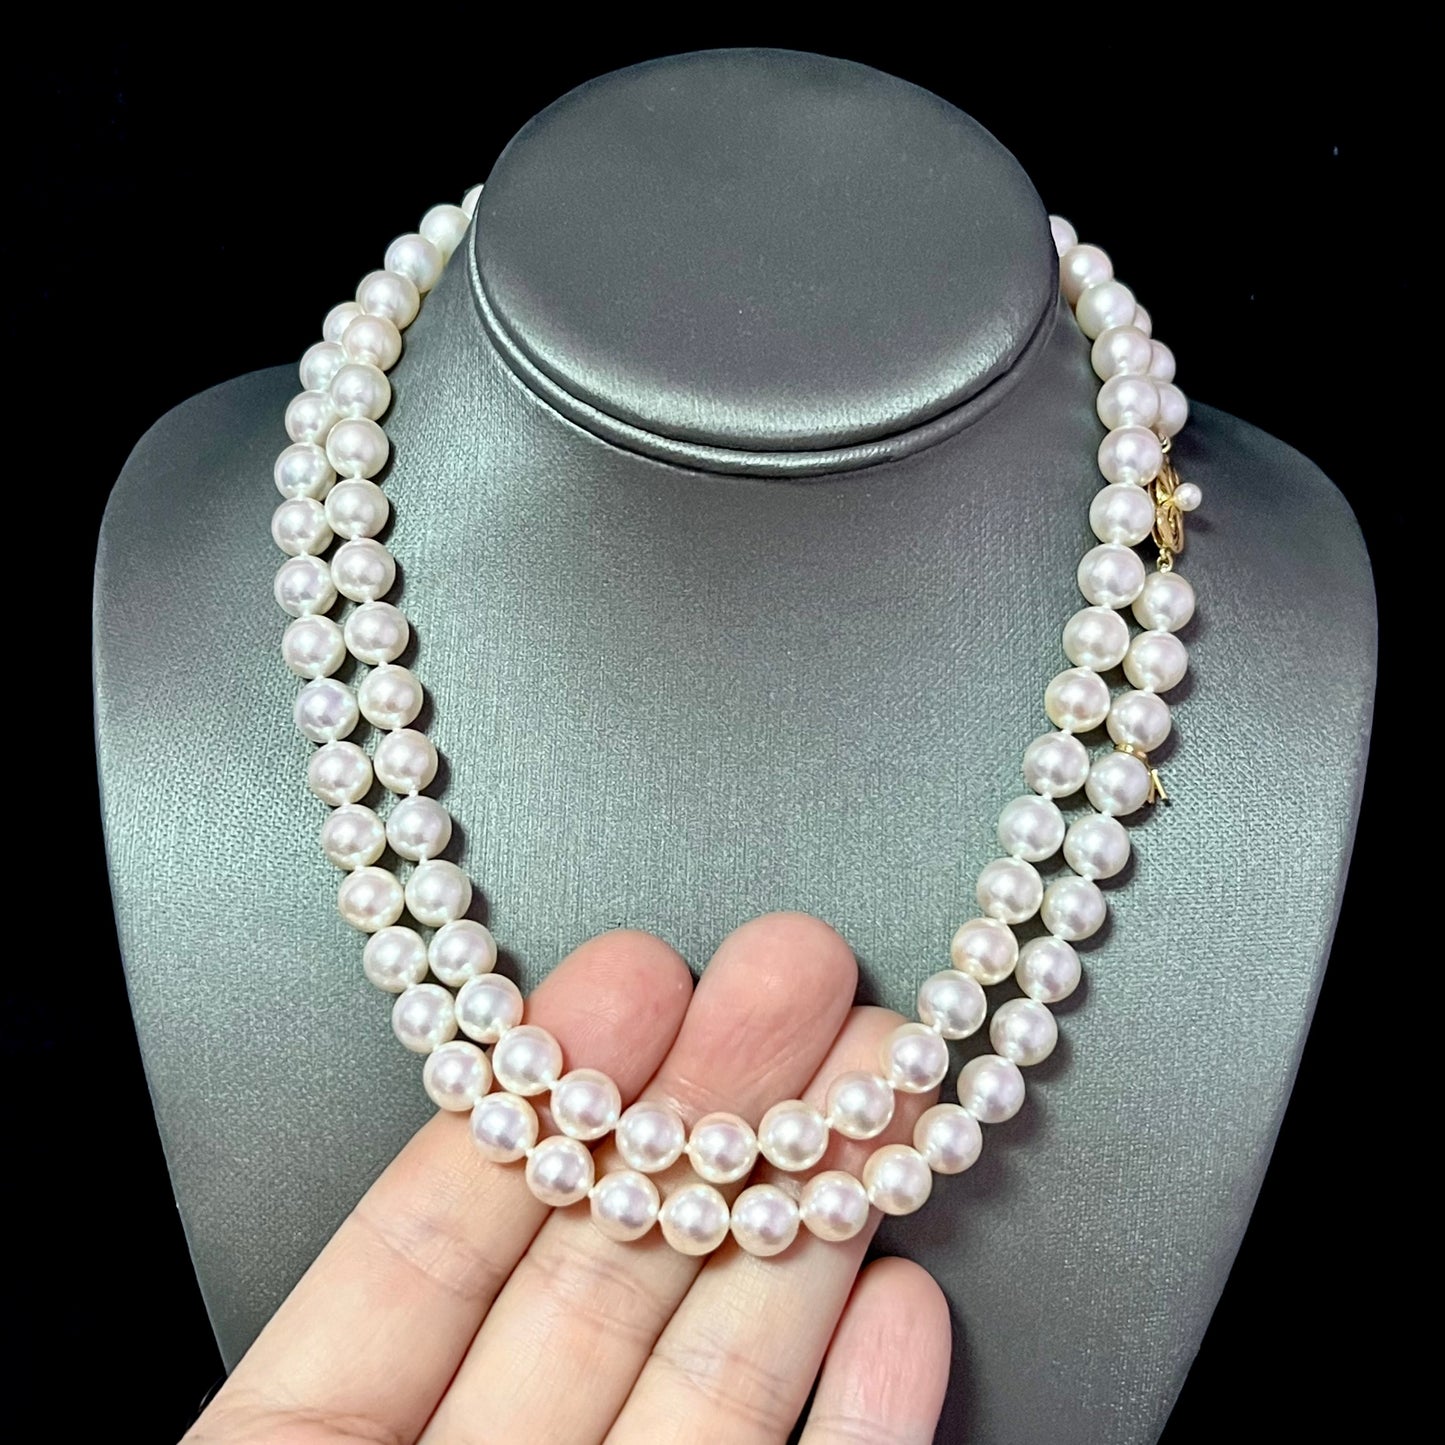 Mikimoto Estate Akoya Pearl Necklace 36" 18k Y Gold 9 mm Certified $56,000 M56000 - Certified Fine Jewelry